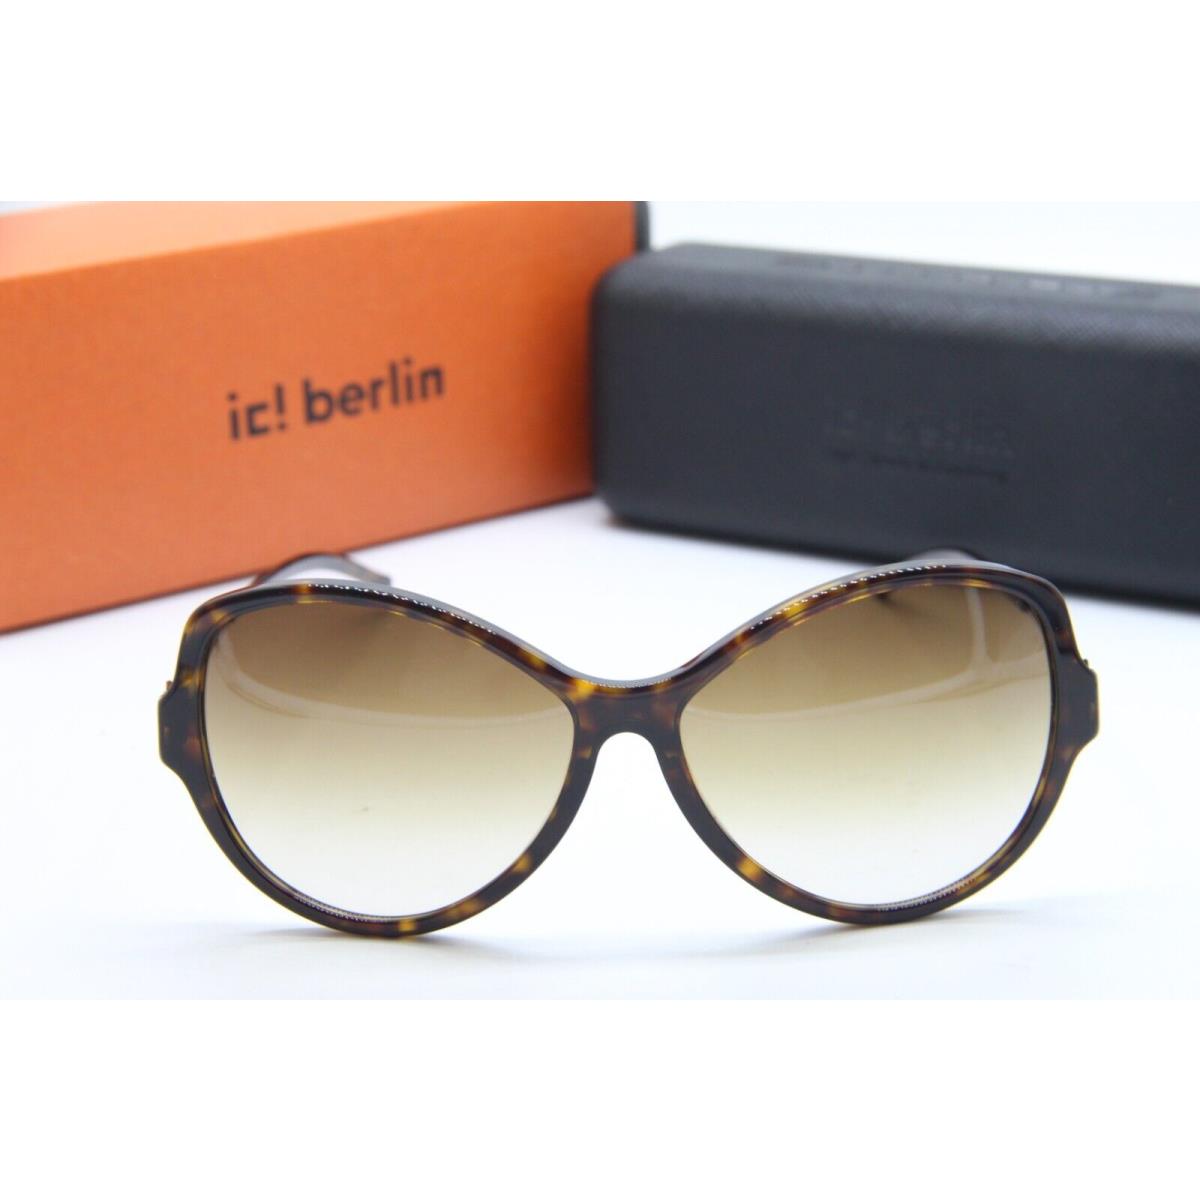 ic! berlin sunglasses PEGGY - GUNMETAL HAVANA Frame, Brown Lens 0